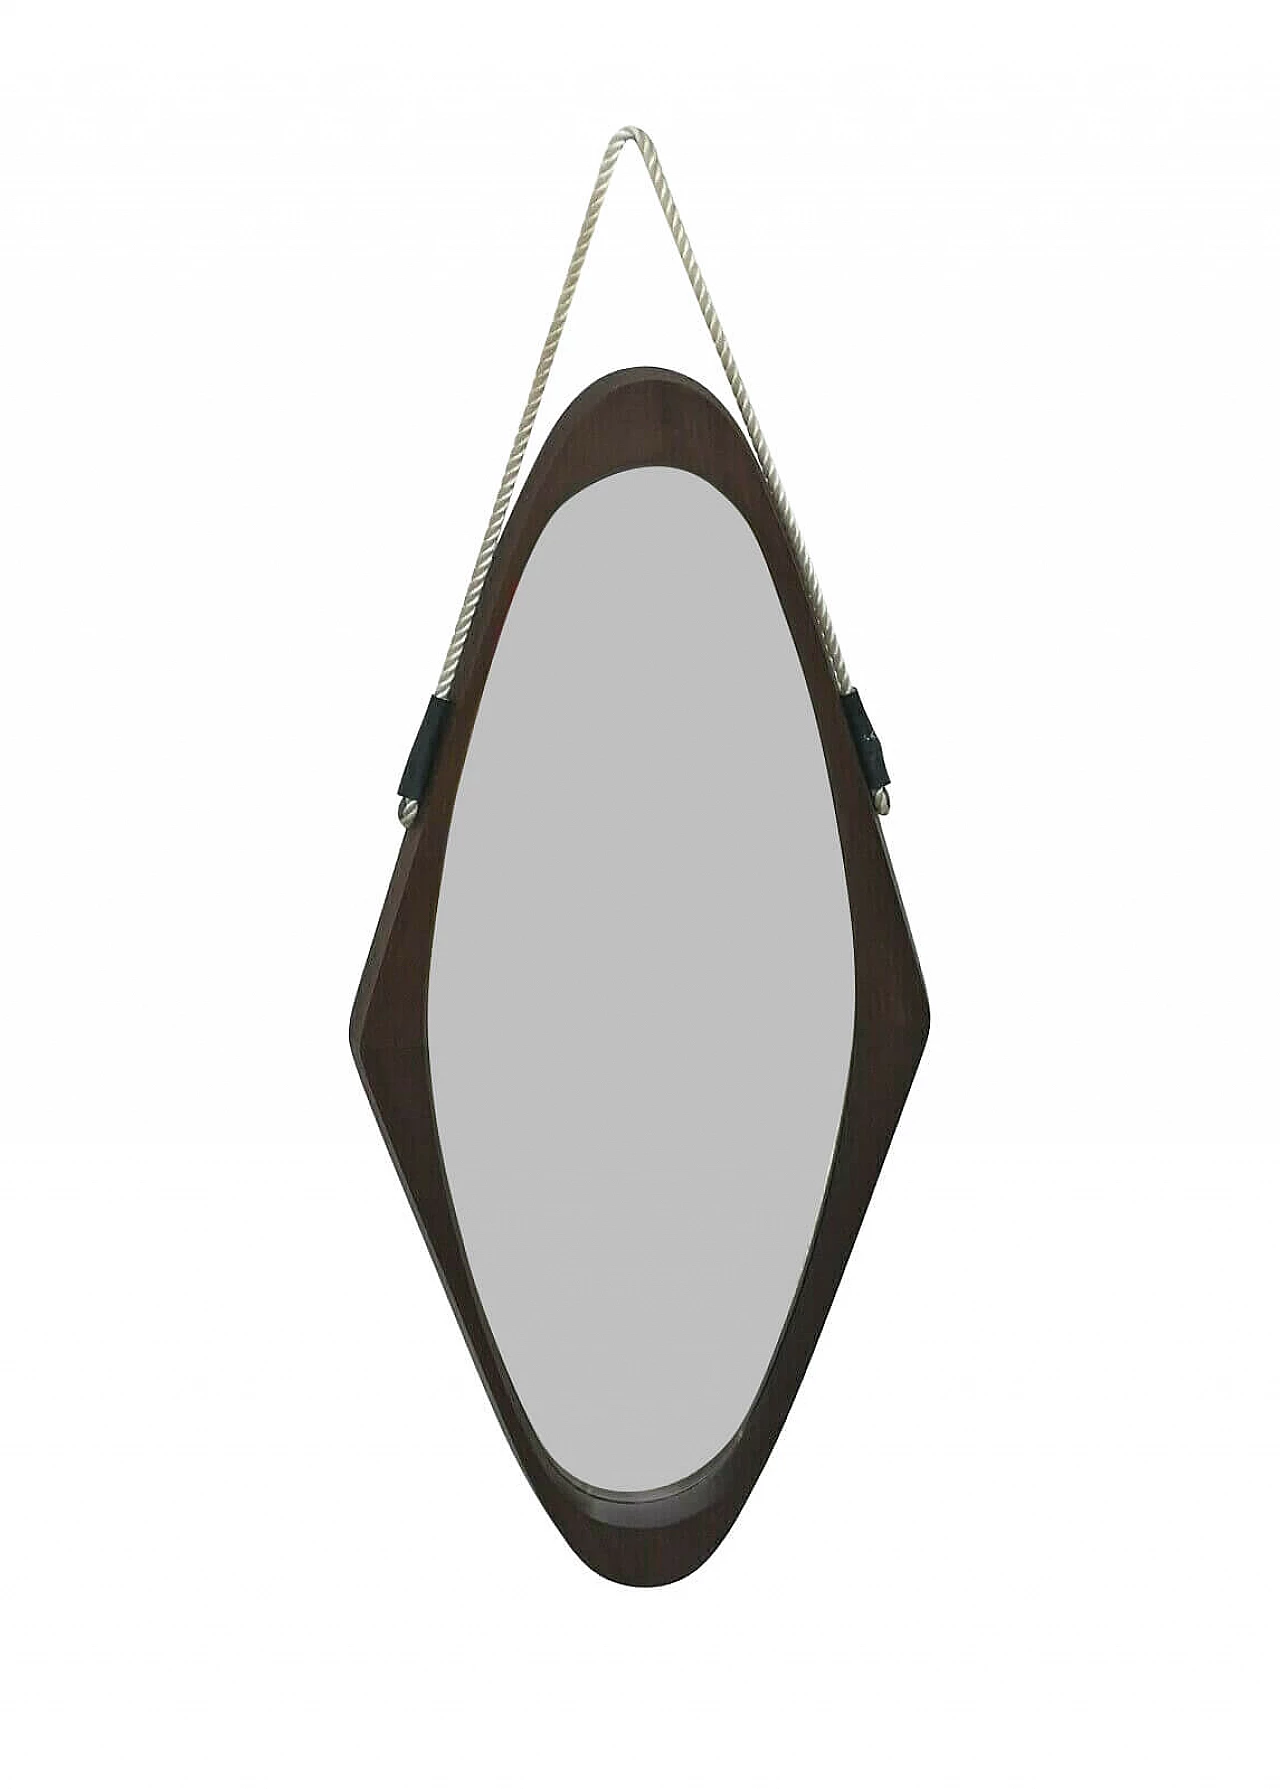 Scandinavian style mirror in teak, 60s 1259140